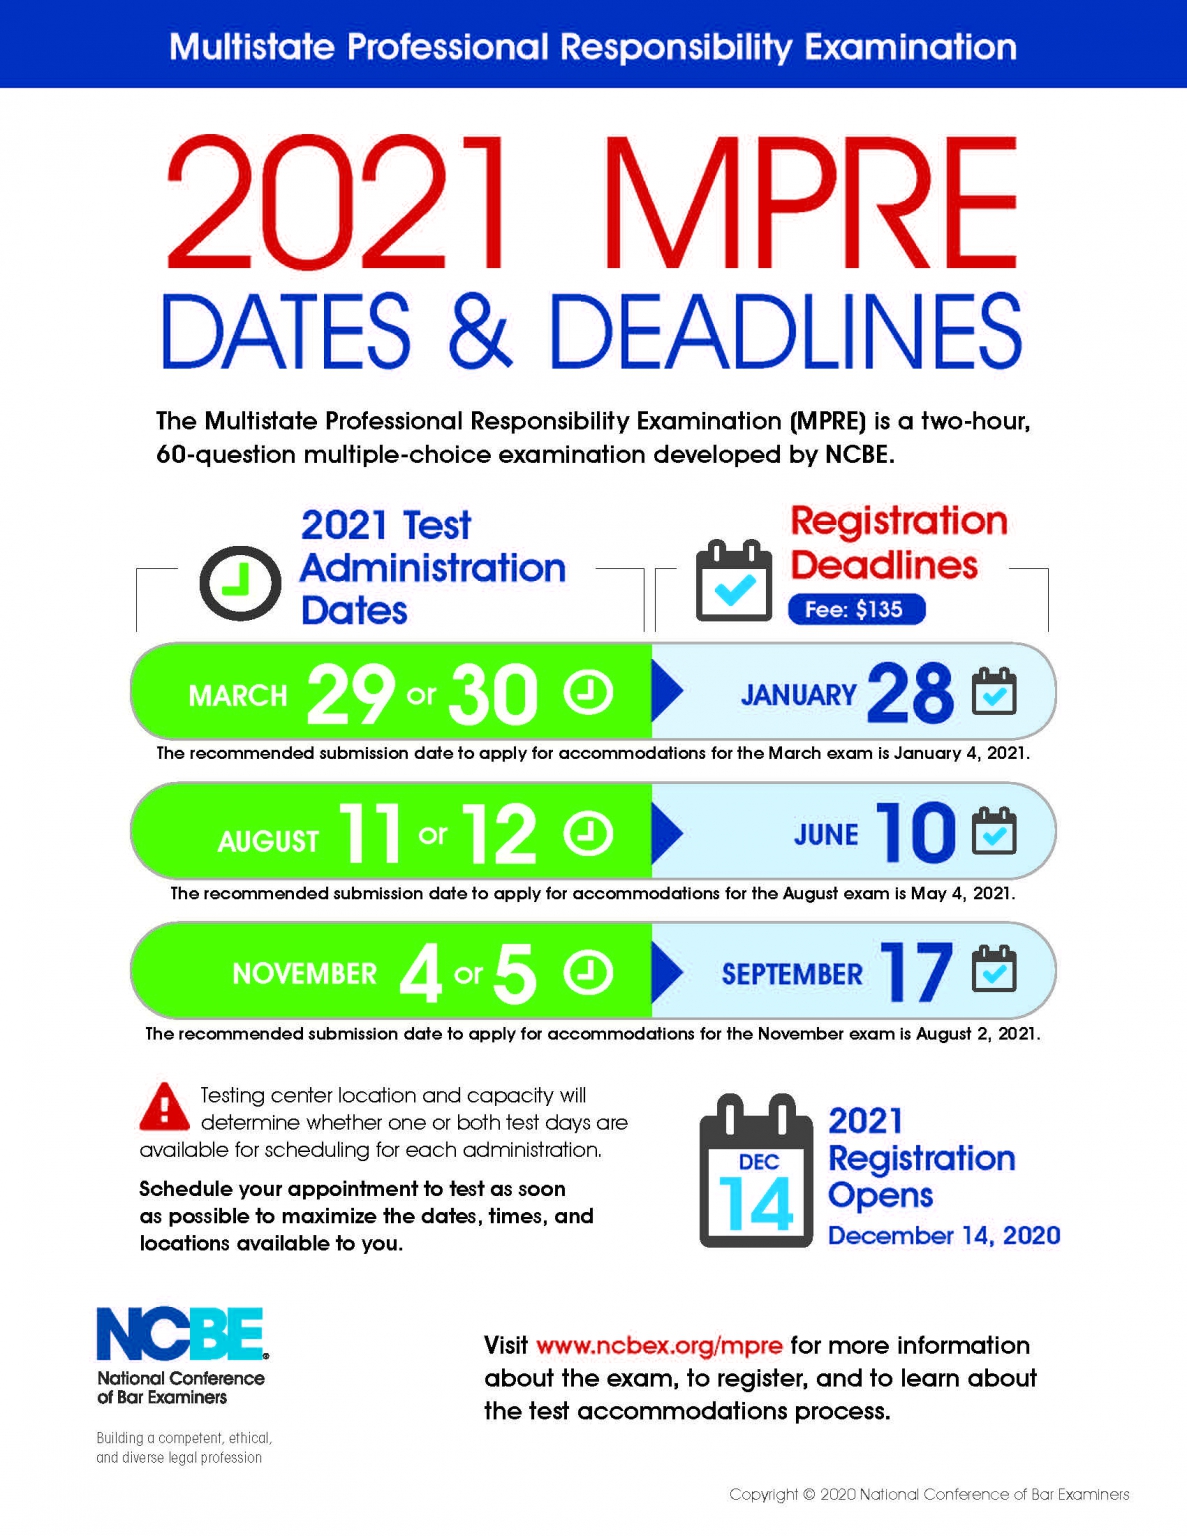 2021 MPRE registration opens on Dec. 14 LSU Law News